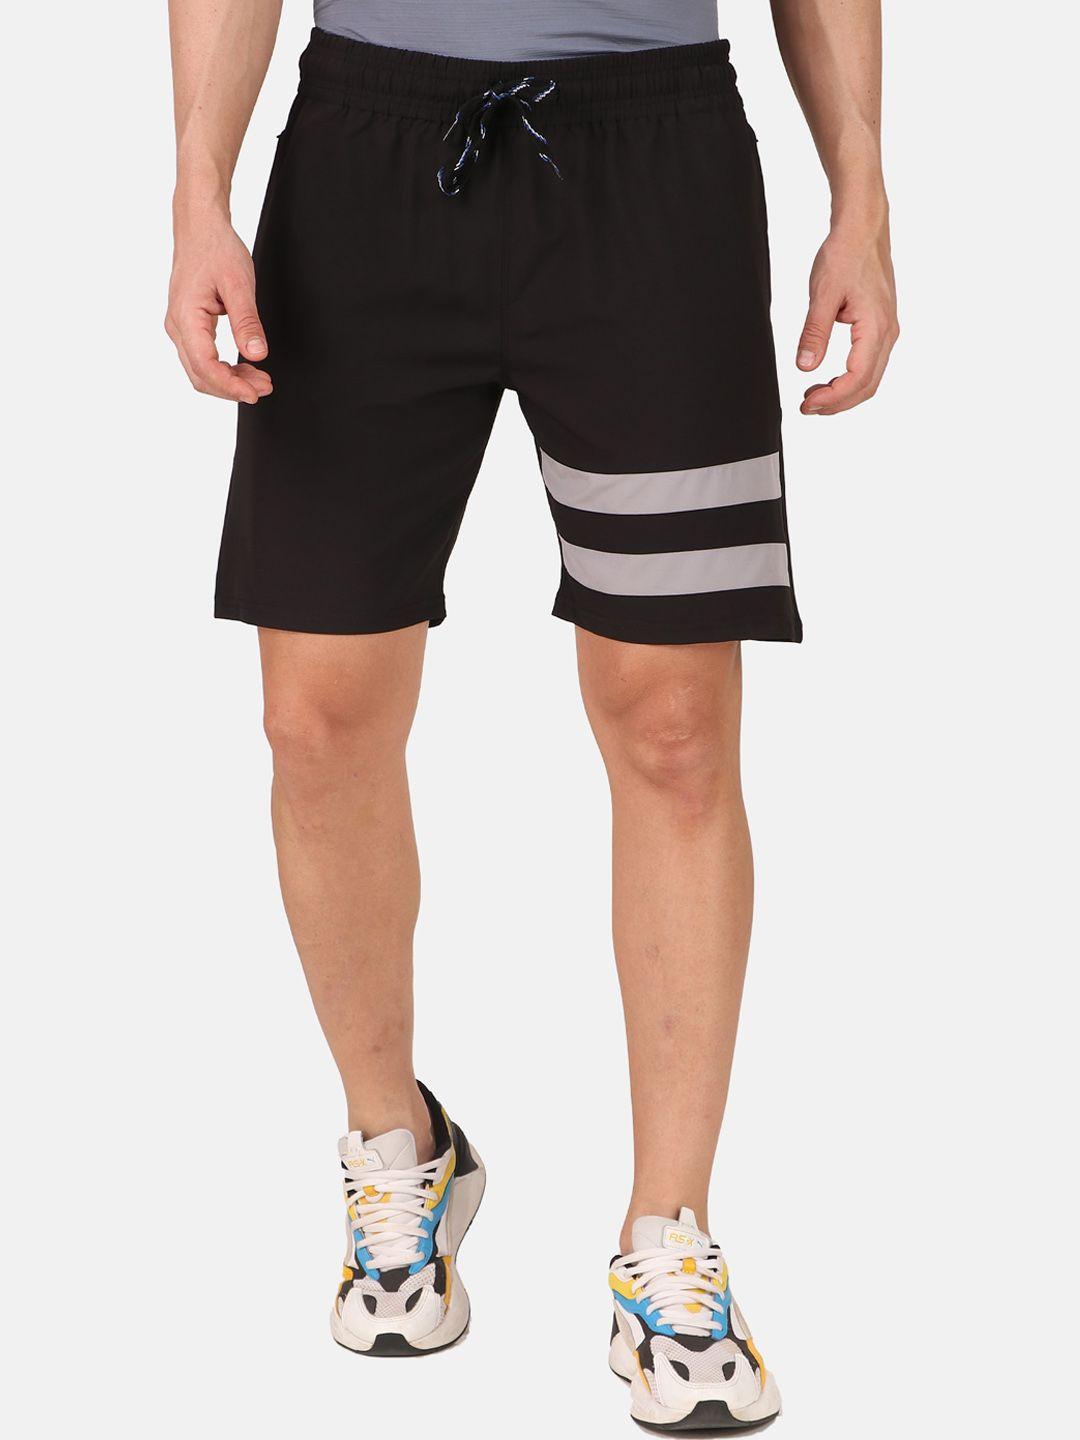 fitinc men black striped running shorts